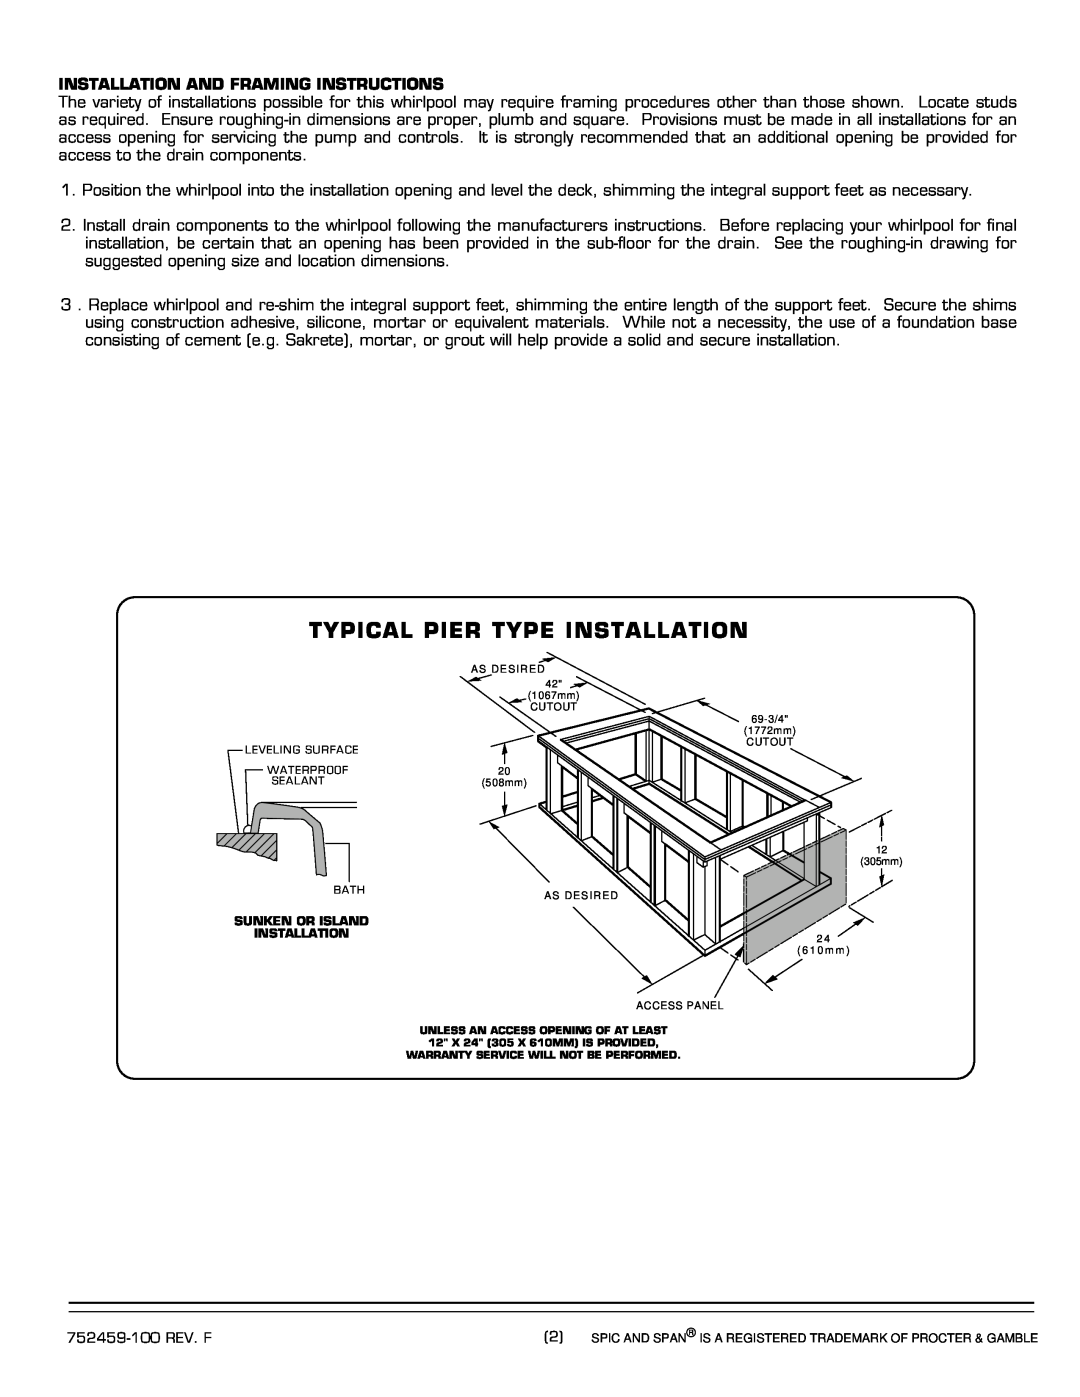 American Standard 2901.XXXW installation instructions Typical Pier Type Installation, Installation And Framing Instructions 